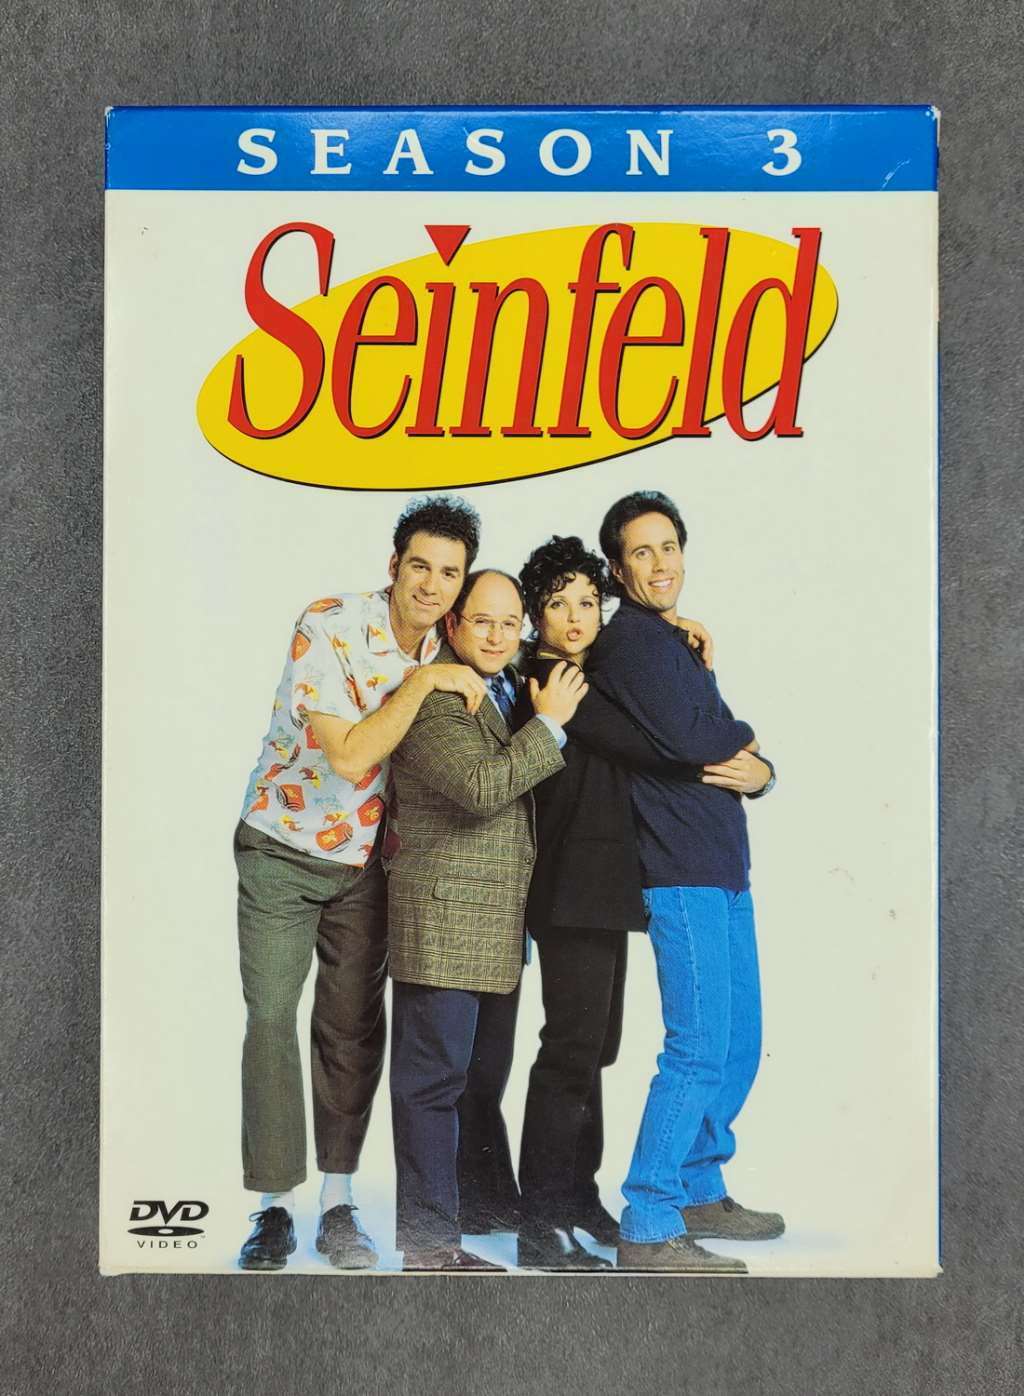 Seinfeld - Season 3 (DVD, 2004, 4-Disc Set) - Excellent Condition